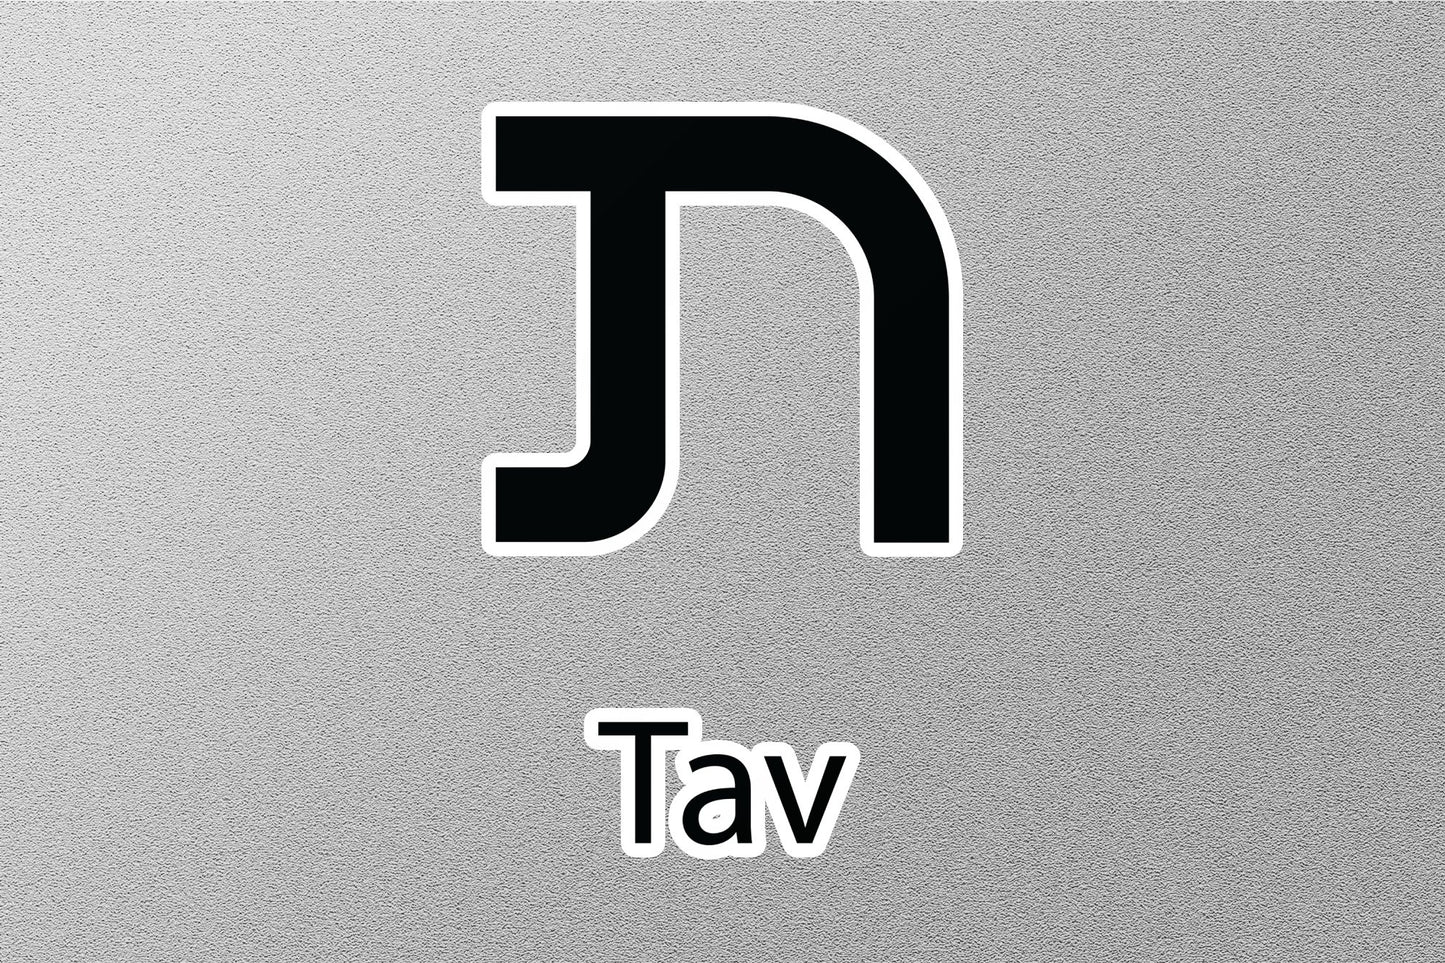 Tav Hebrew Alphabet Sticker